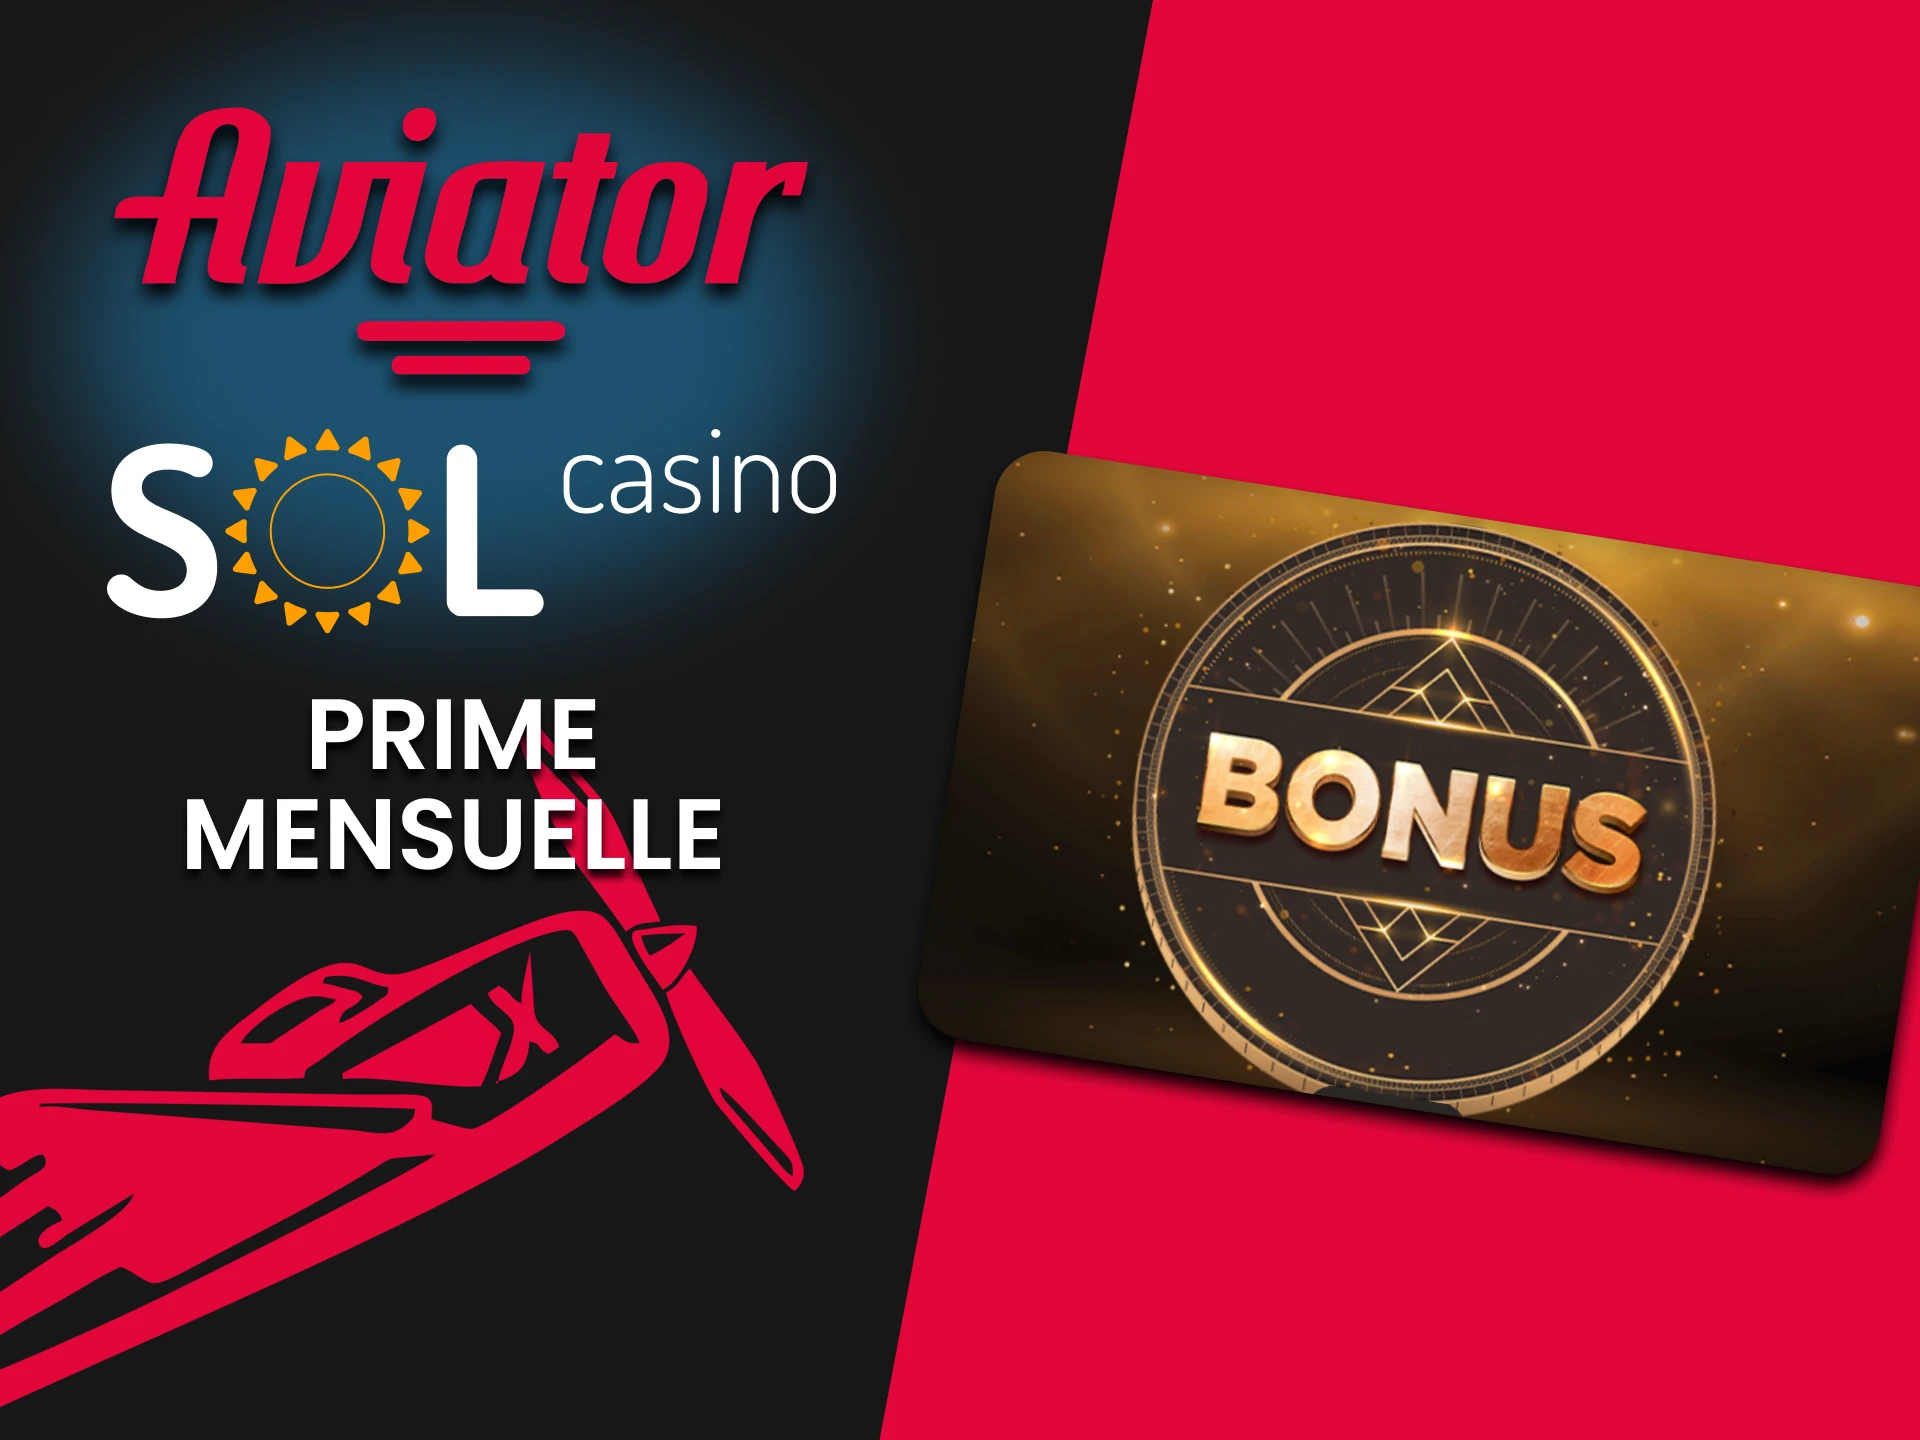 Sol Casino offre un bonus mensuel pour le jeu Aviator.